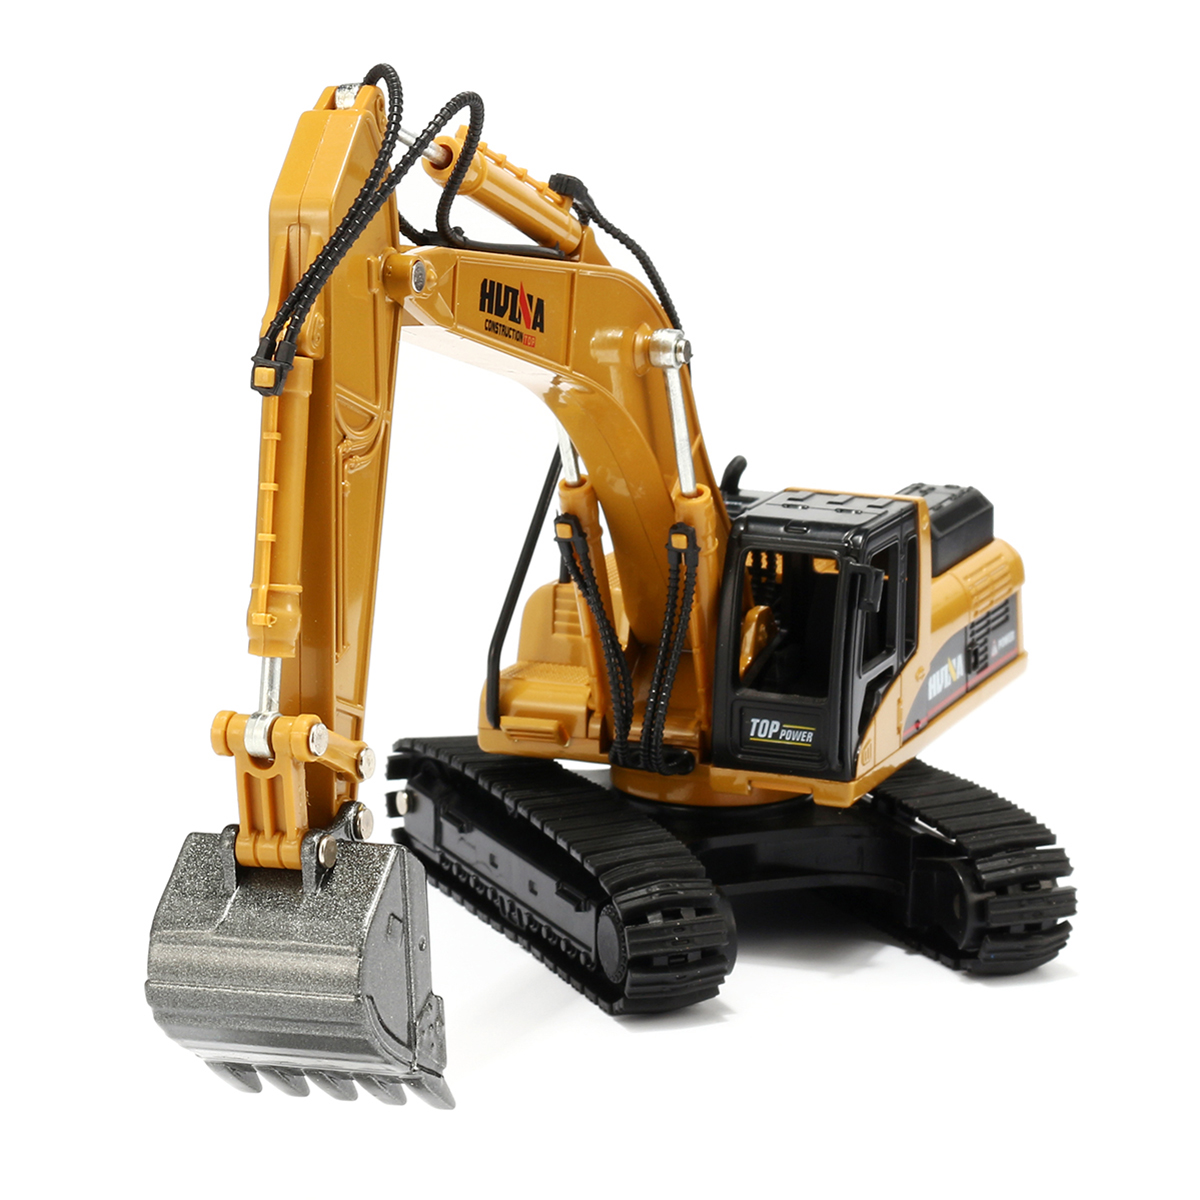 150-Alloy-Excavator-Toys-Engineering-Vehicle-Diecast-Model-Metal-Castings-Vehicles-1327403-2